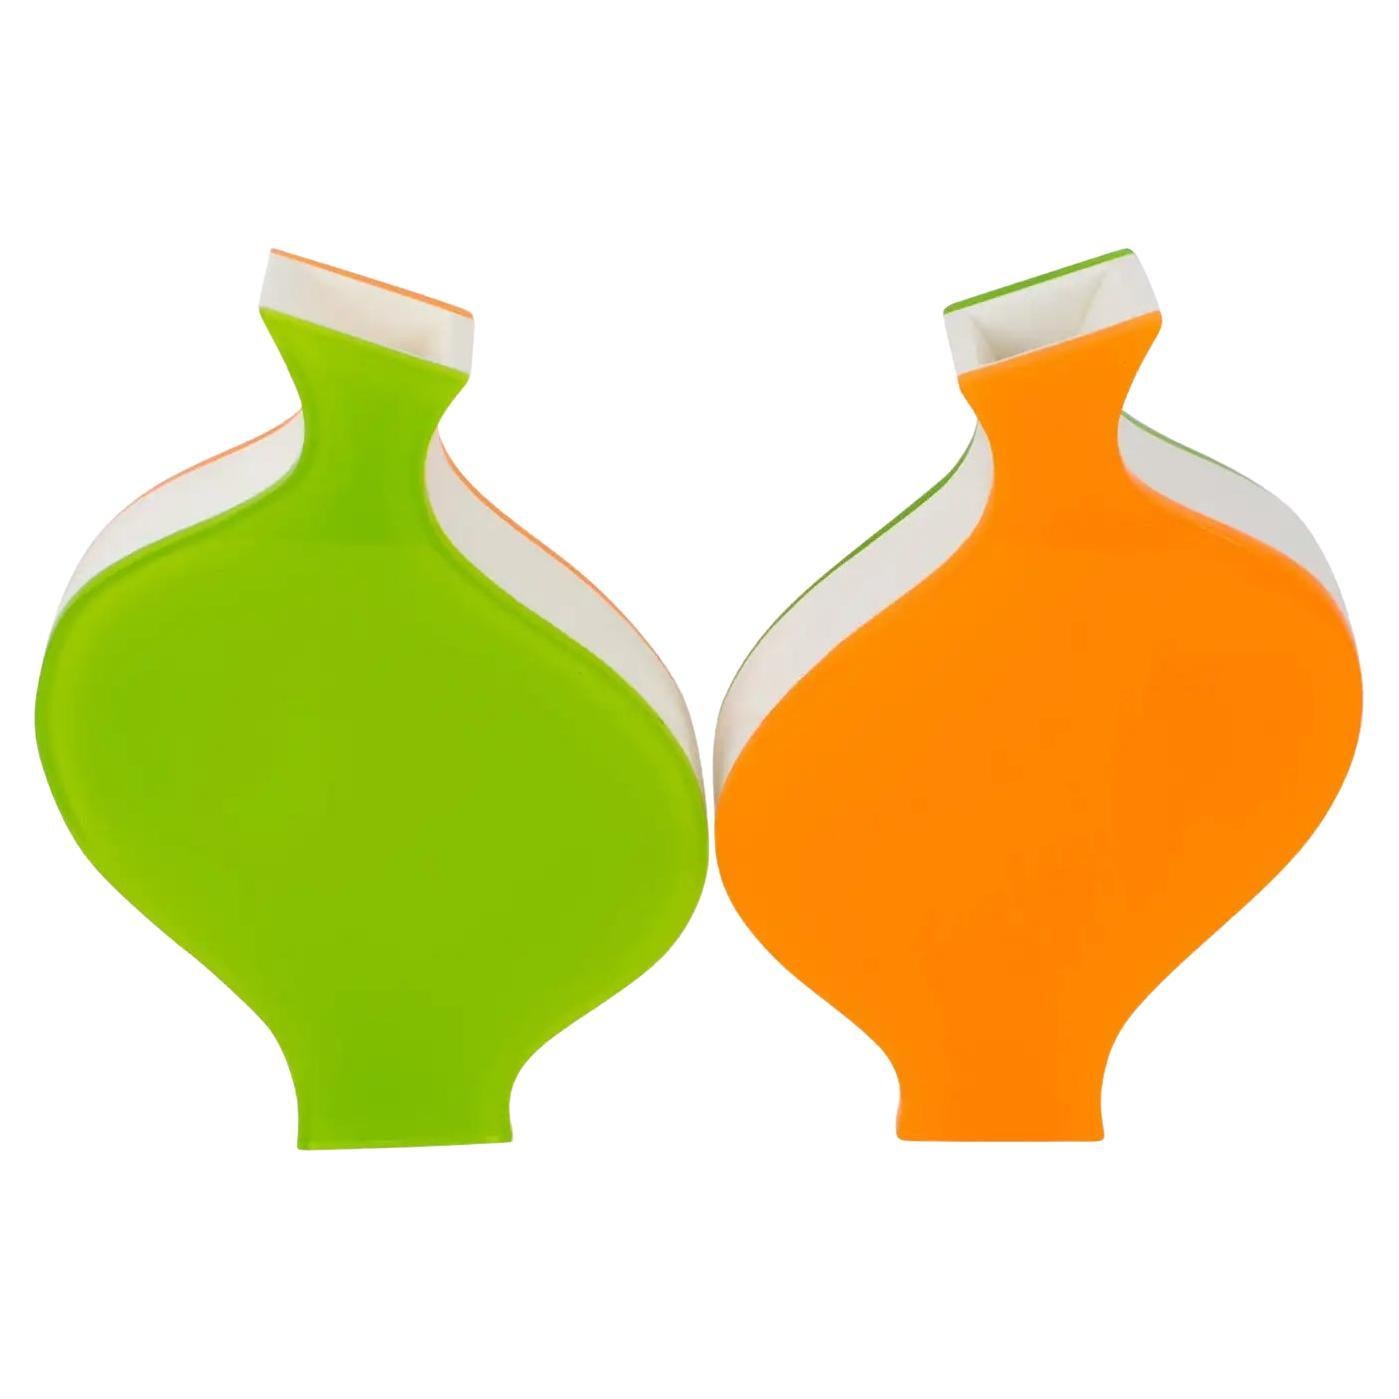 Villeroy & Boch Orange and Green Lucite Vases, 1990s For Sale